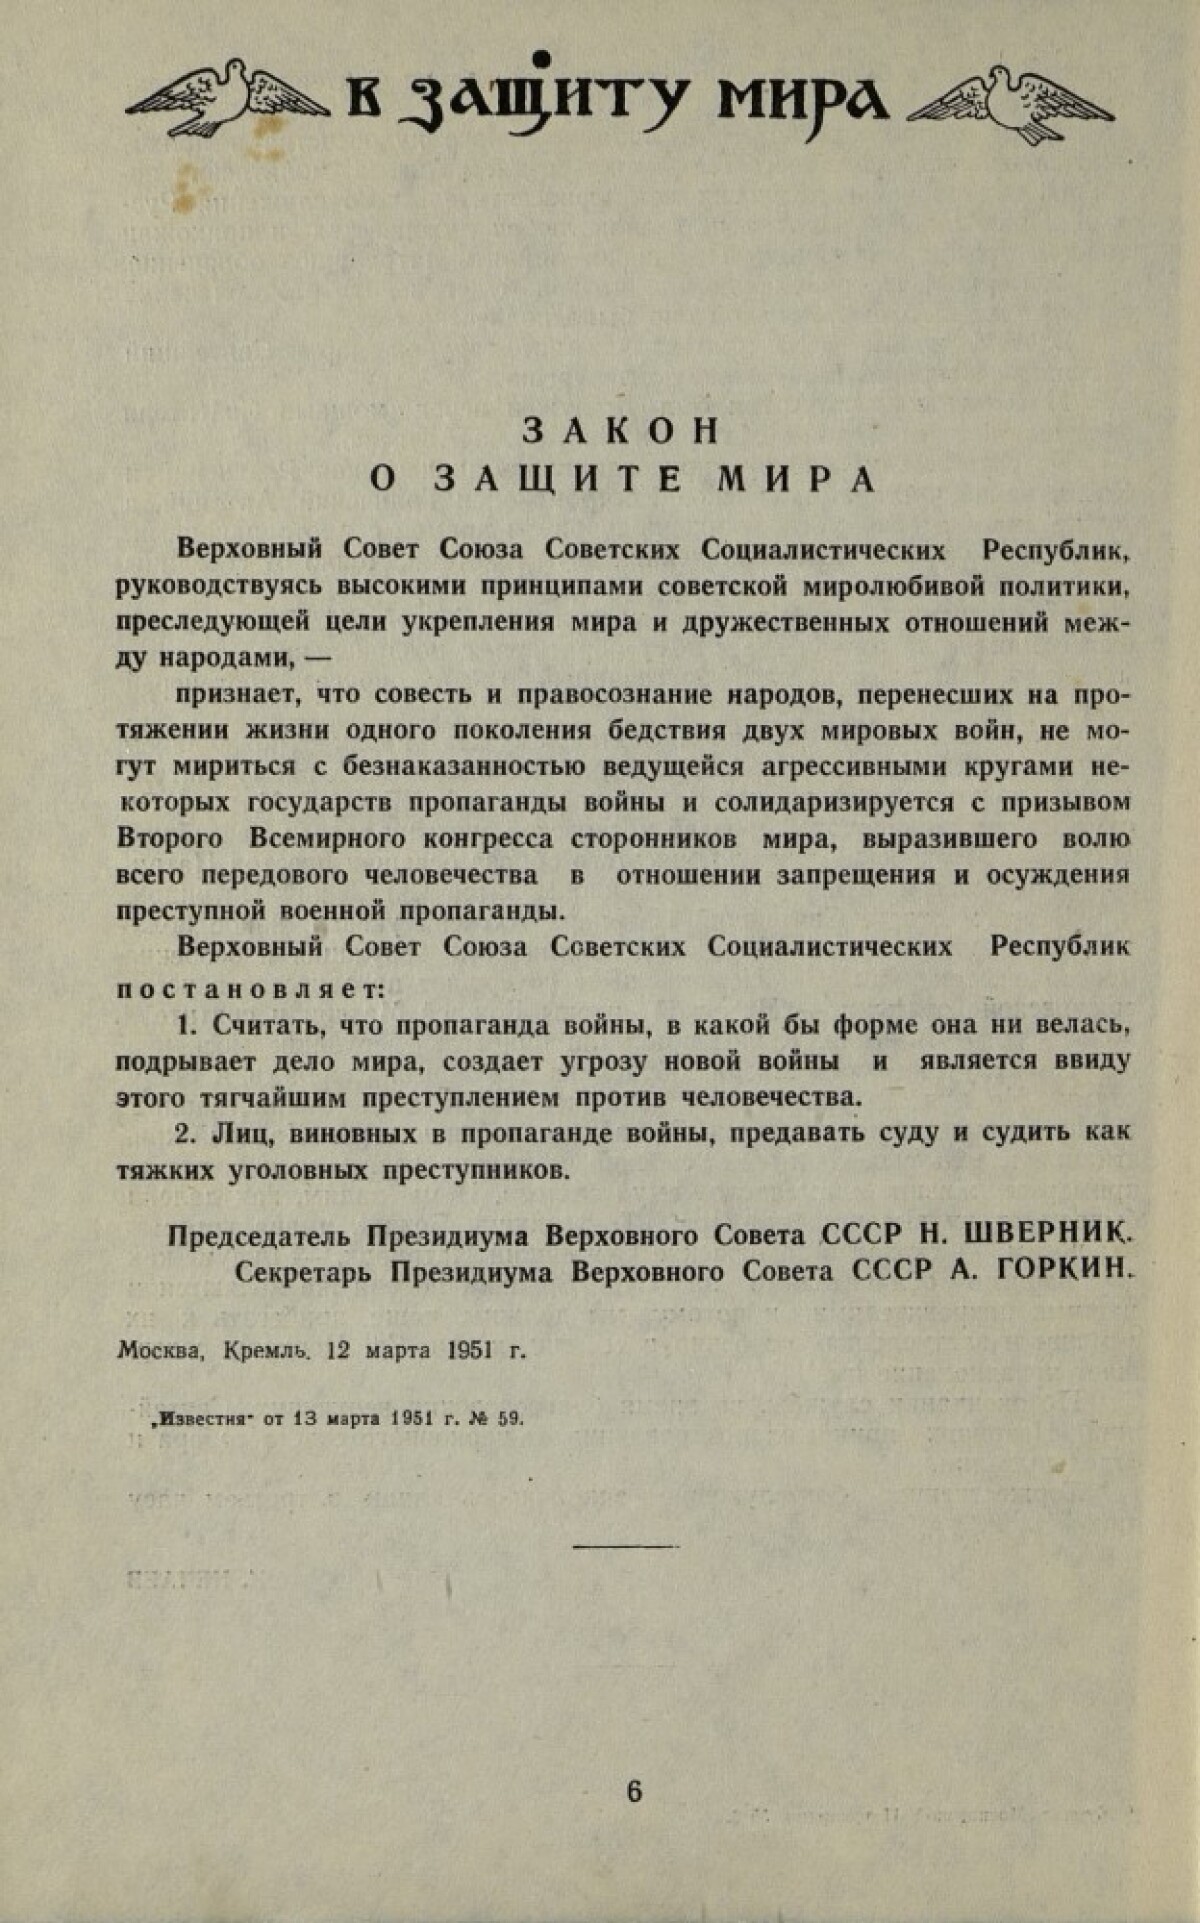 12 марта 1951 год - принят Закон о защите мира - e-history.kz